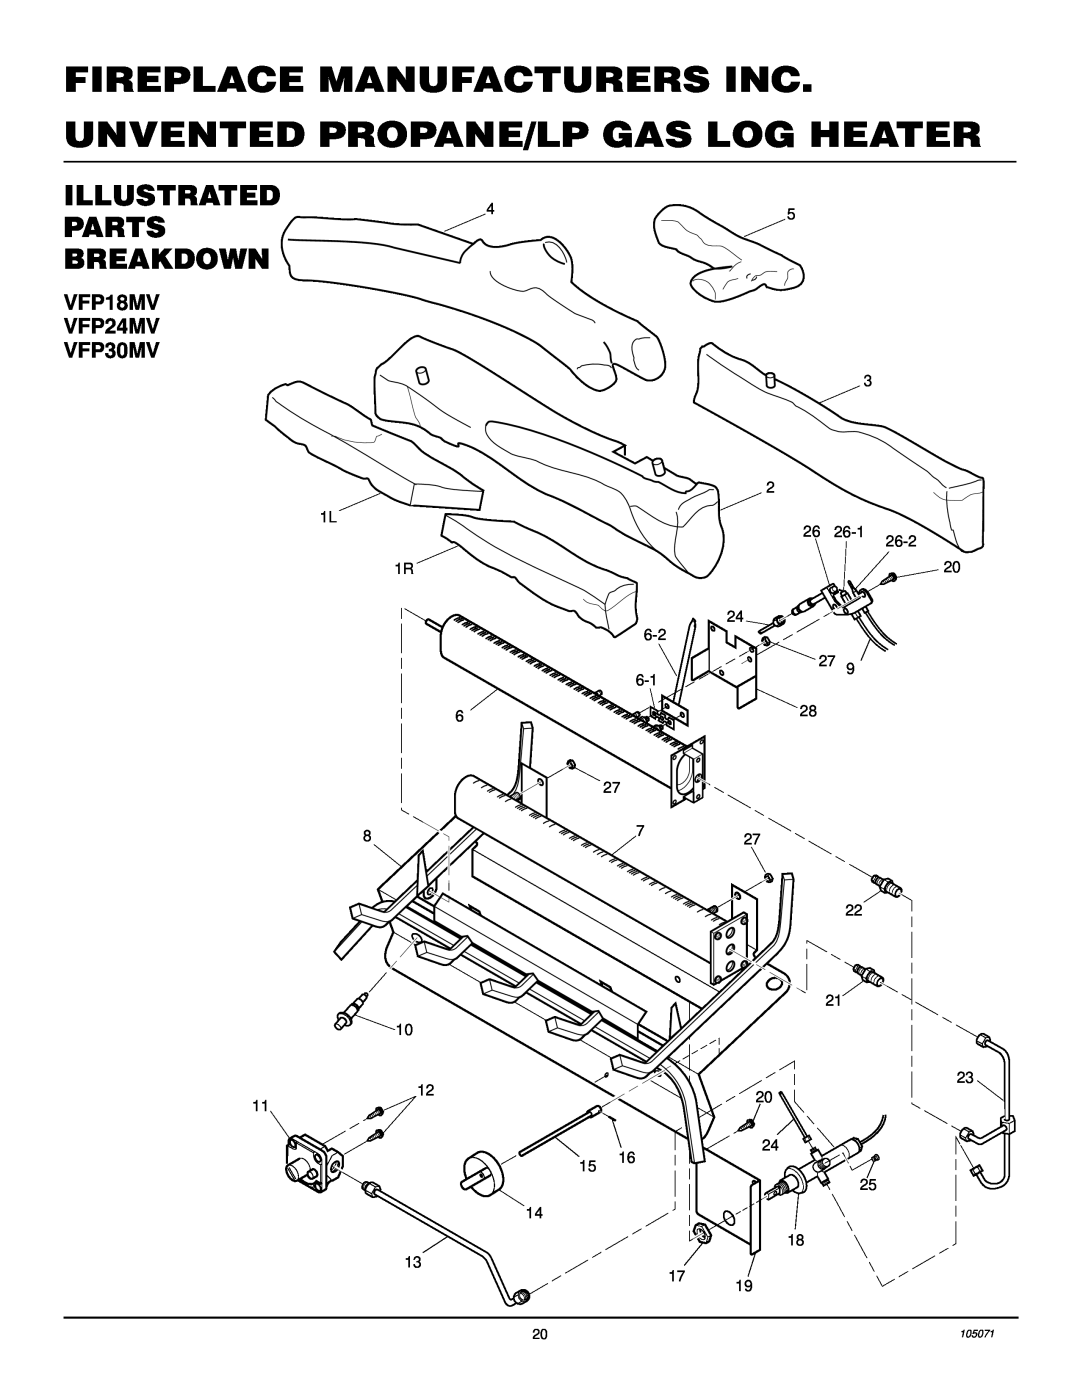 Desa VFP30MV, VFP18MV Illustrated, Parts Breakdown, Fireplace Manufacturers Inc, Unvented Propane/Lp Gas Log Heater 